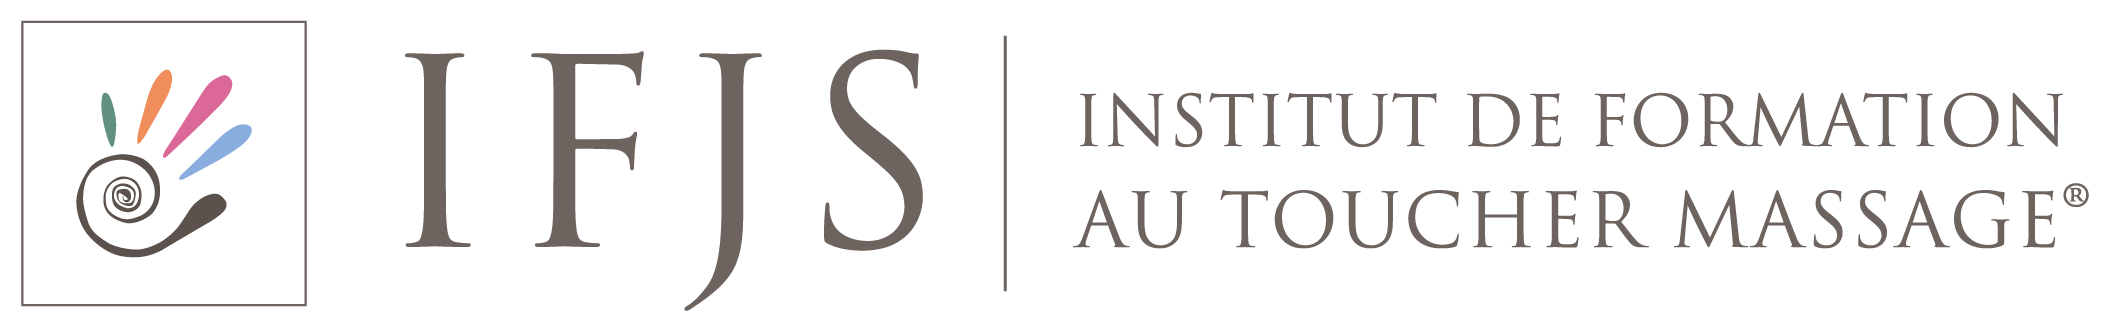 Logo de l'Institut de Formation Joël Savatofski